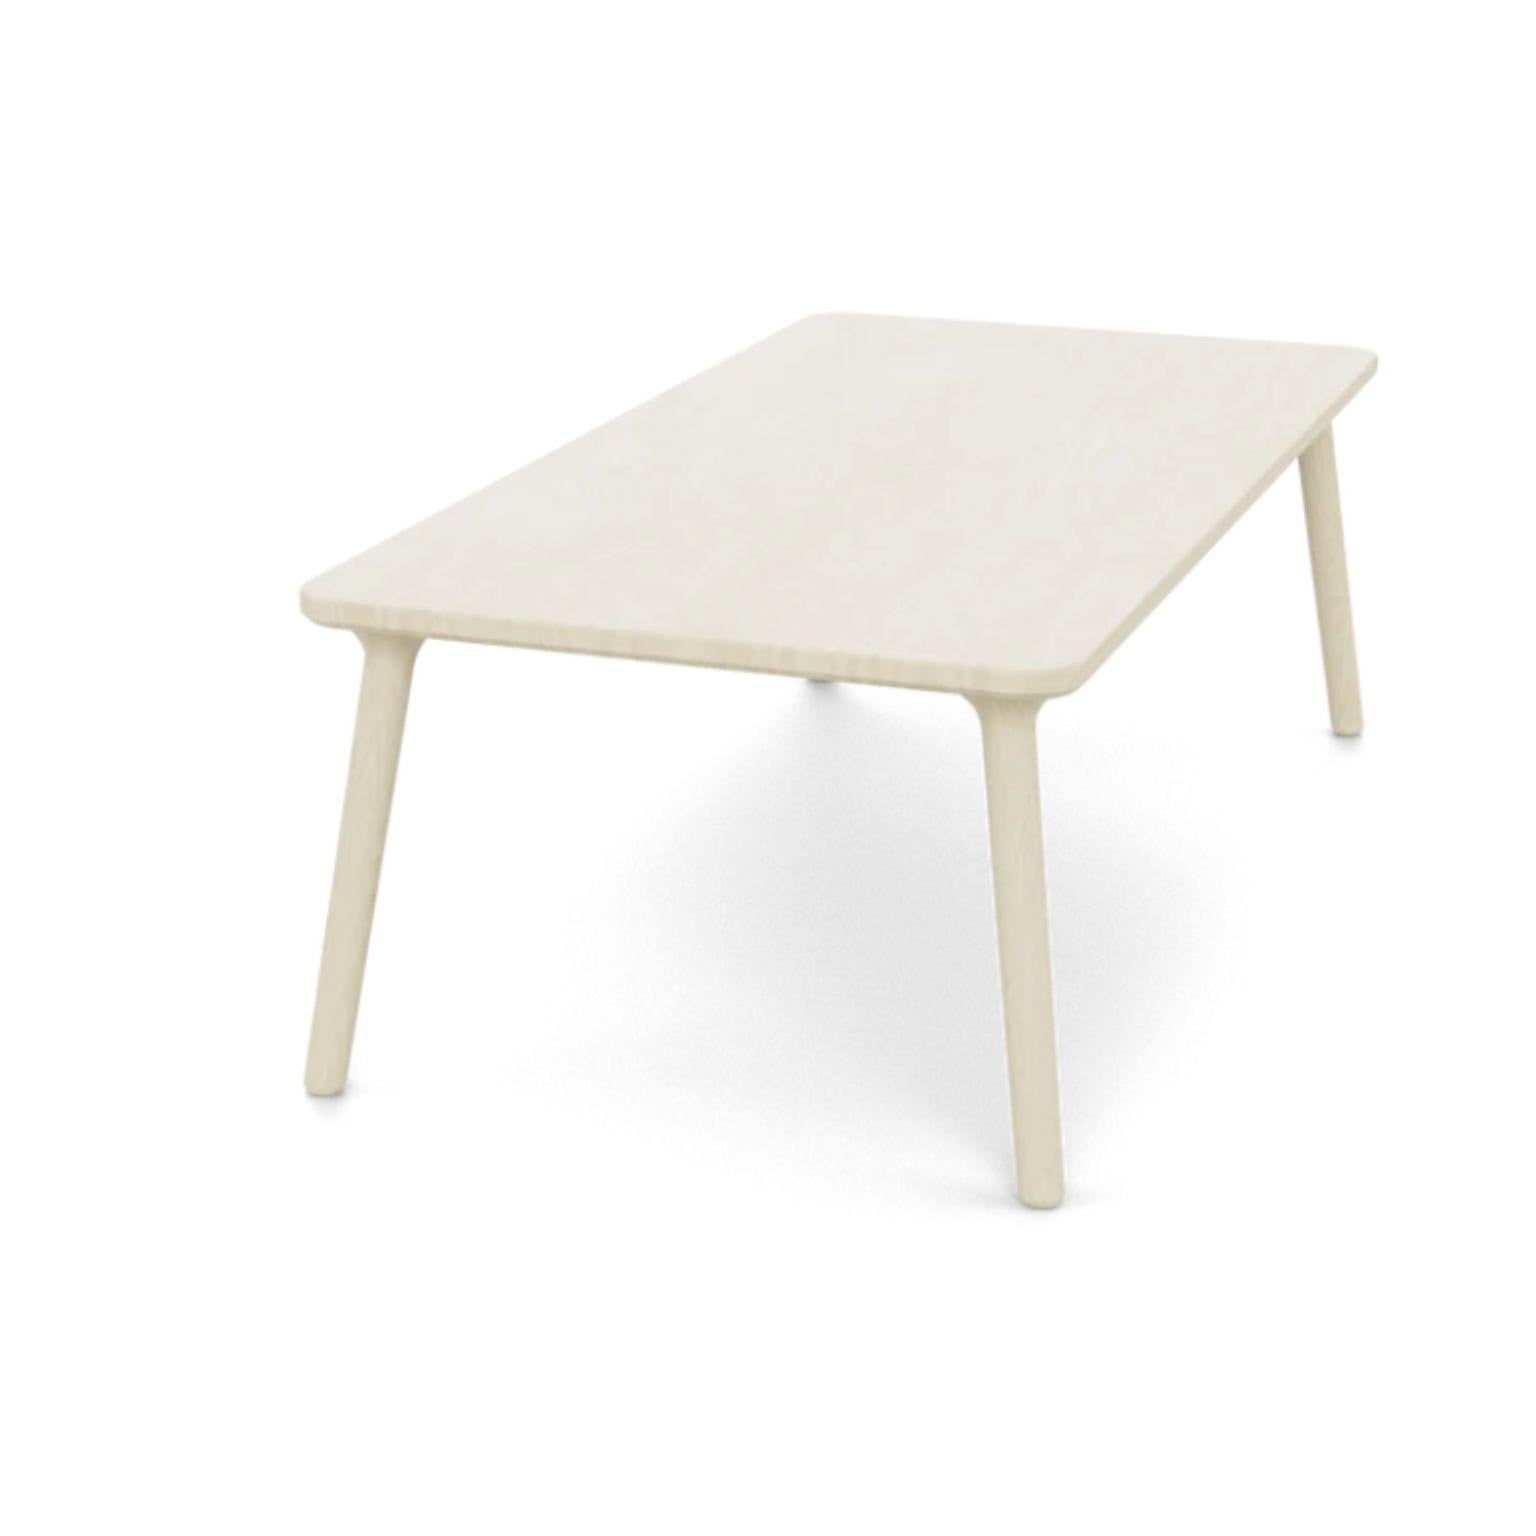 Table basse en frêne blanc mod 2 par Fernweh Woodworking
Dimensions : 
L 24